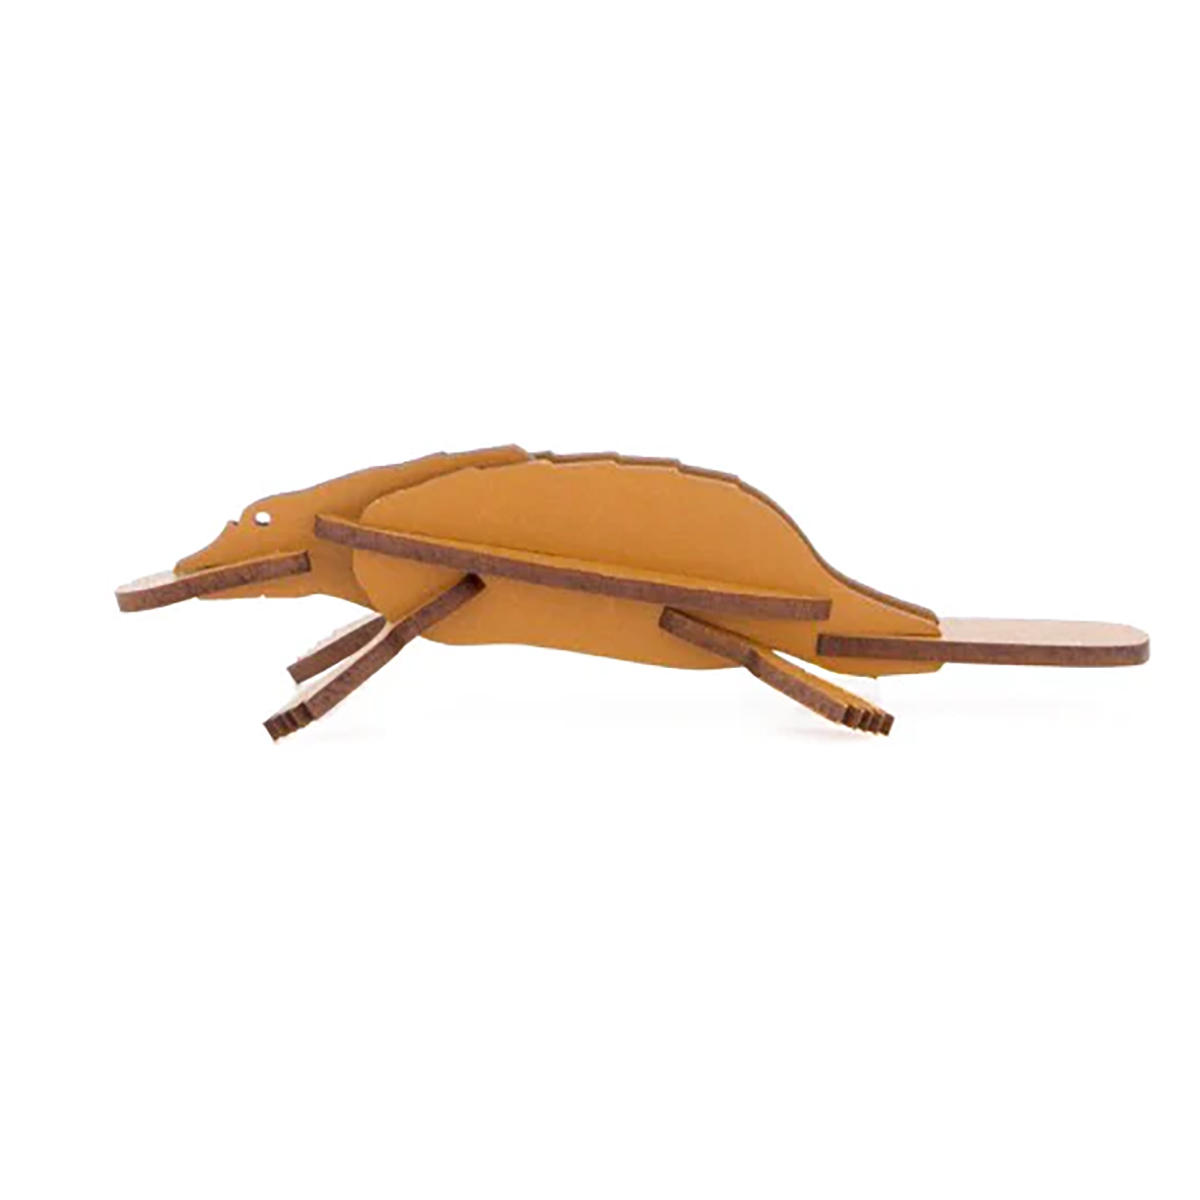 Platypus Wooden Model Kit additional image